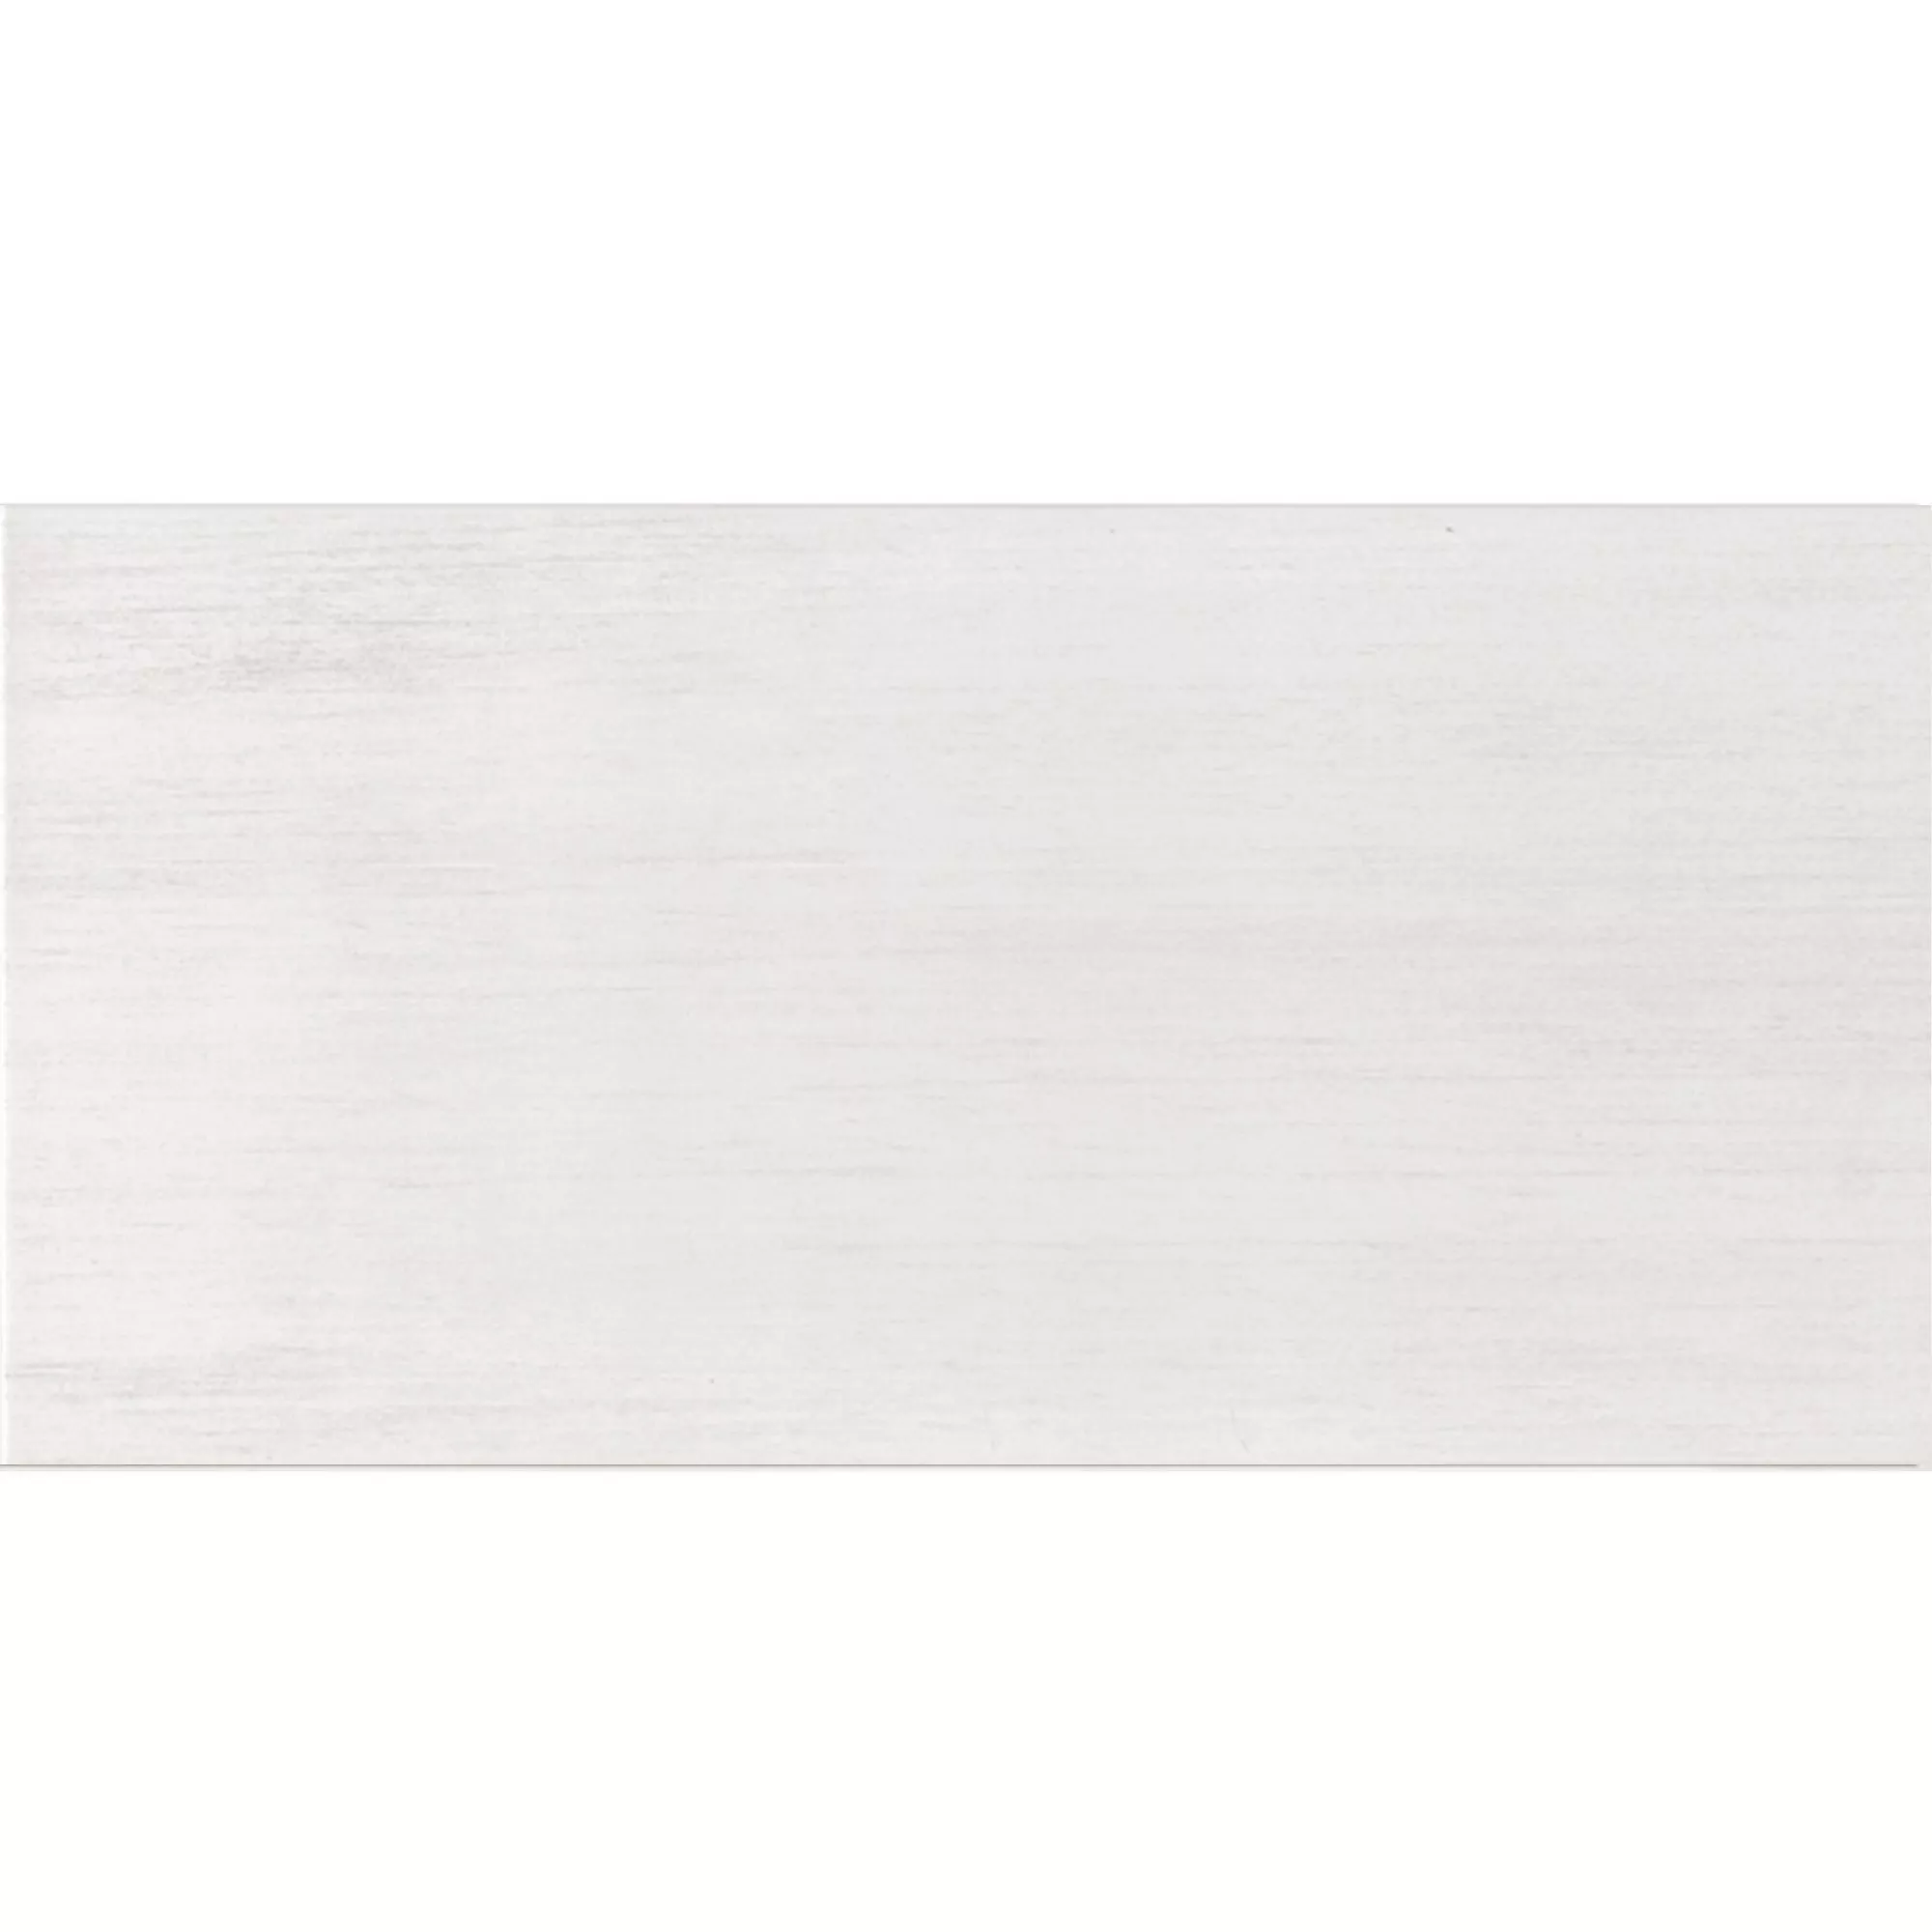 Wandfliese Meyrin Weiß 30x60cm